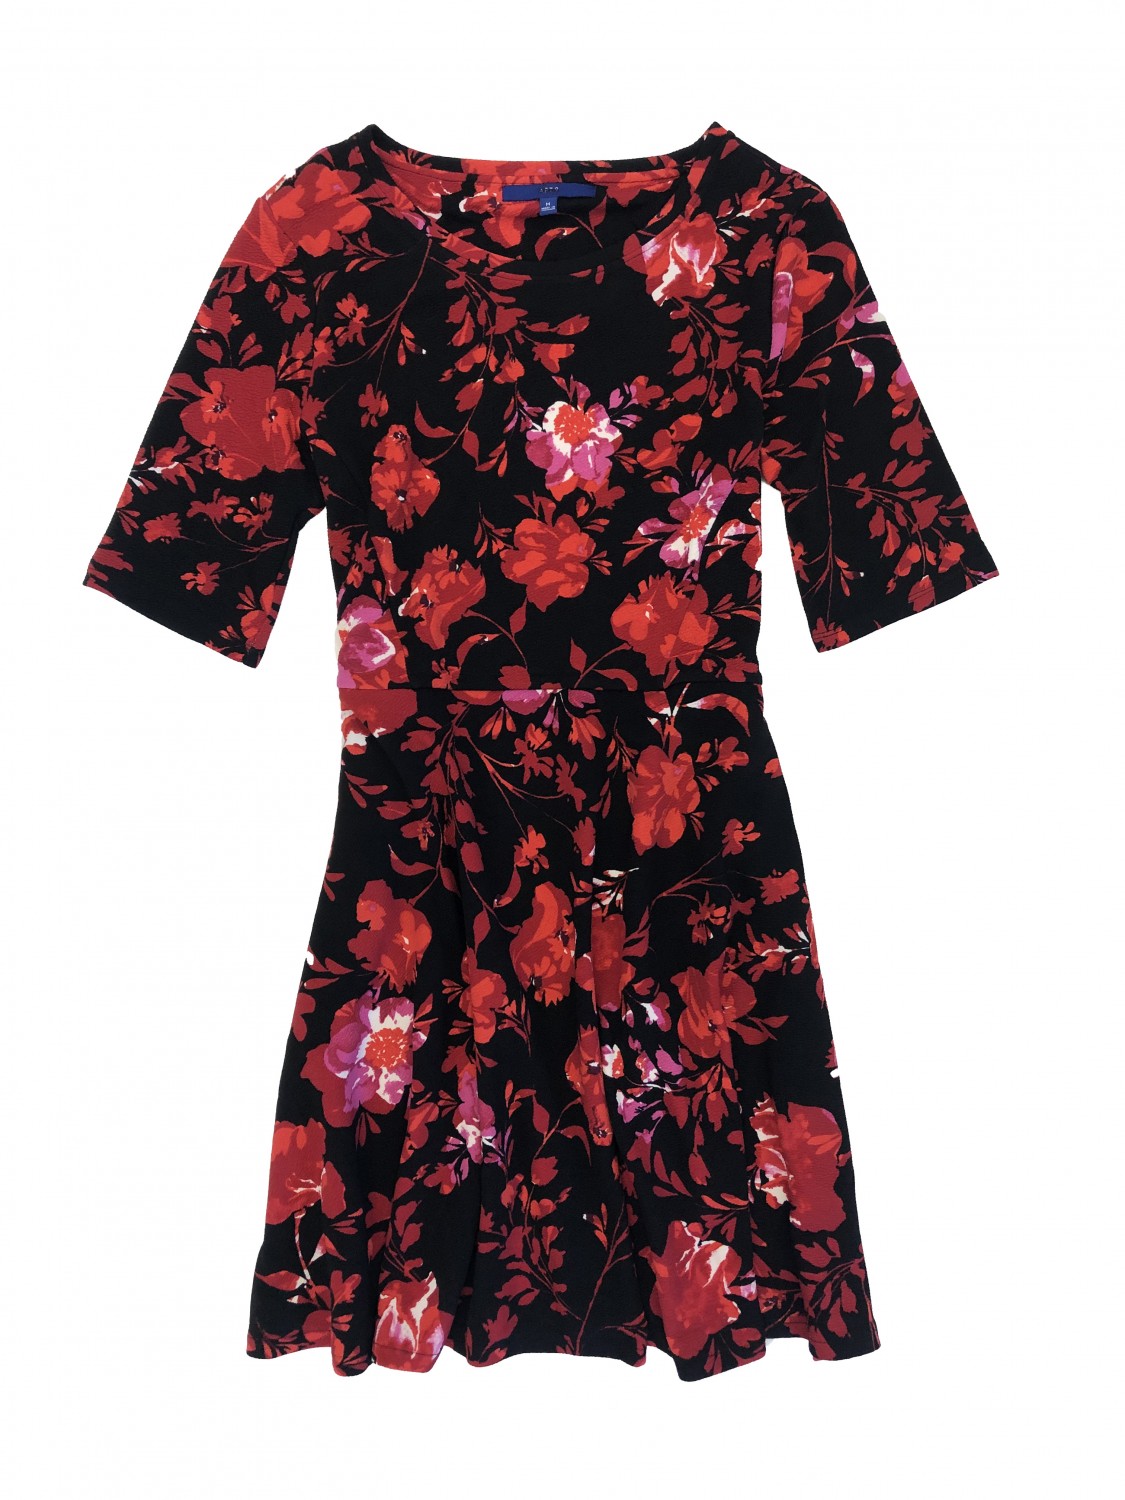 APT 9 Short Sleeve Swing Dress; Black Red Floral - Charlotte Warehouse Sale